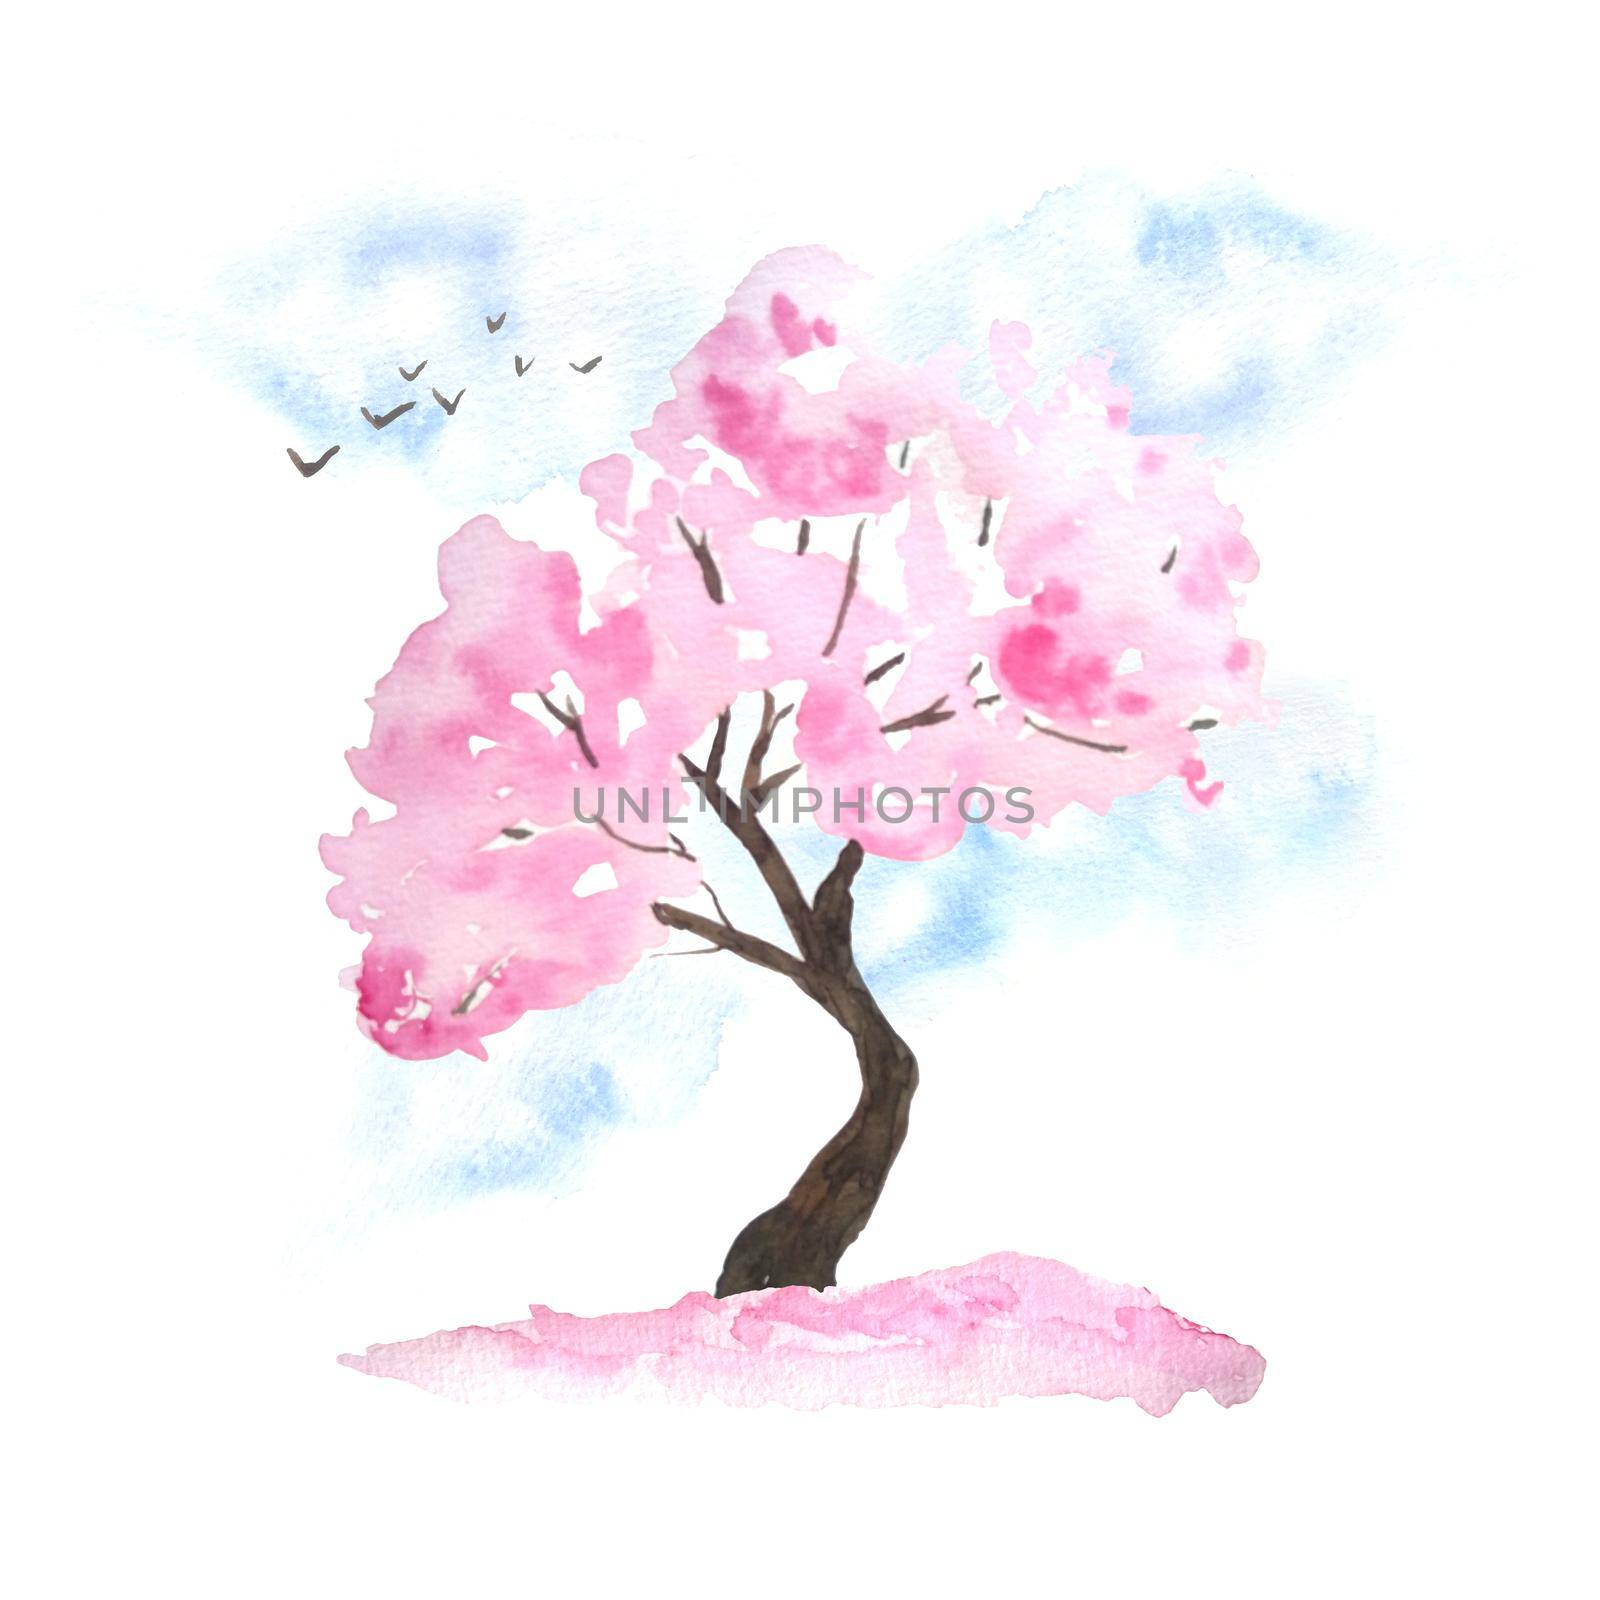 Watercolor hand drawn design illustration of pink cherry sakura tree in bloom blossom flowers, sky, birds, fallen petals. Hanami festival traditional japan japanese culture. Nature landscape plant. Spring march april by Lagmar